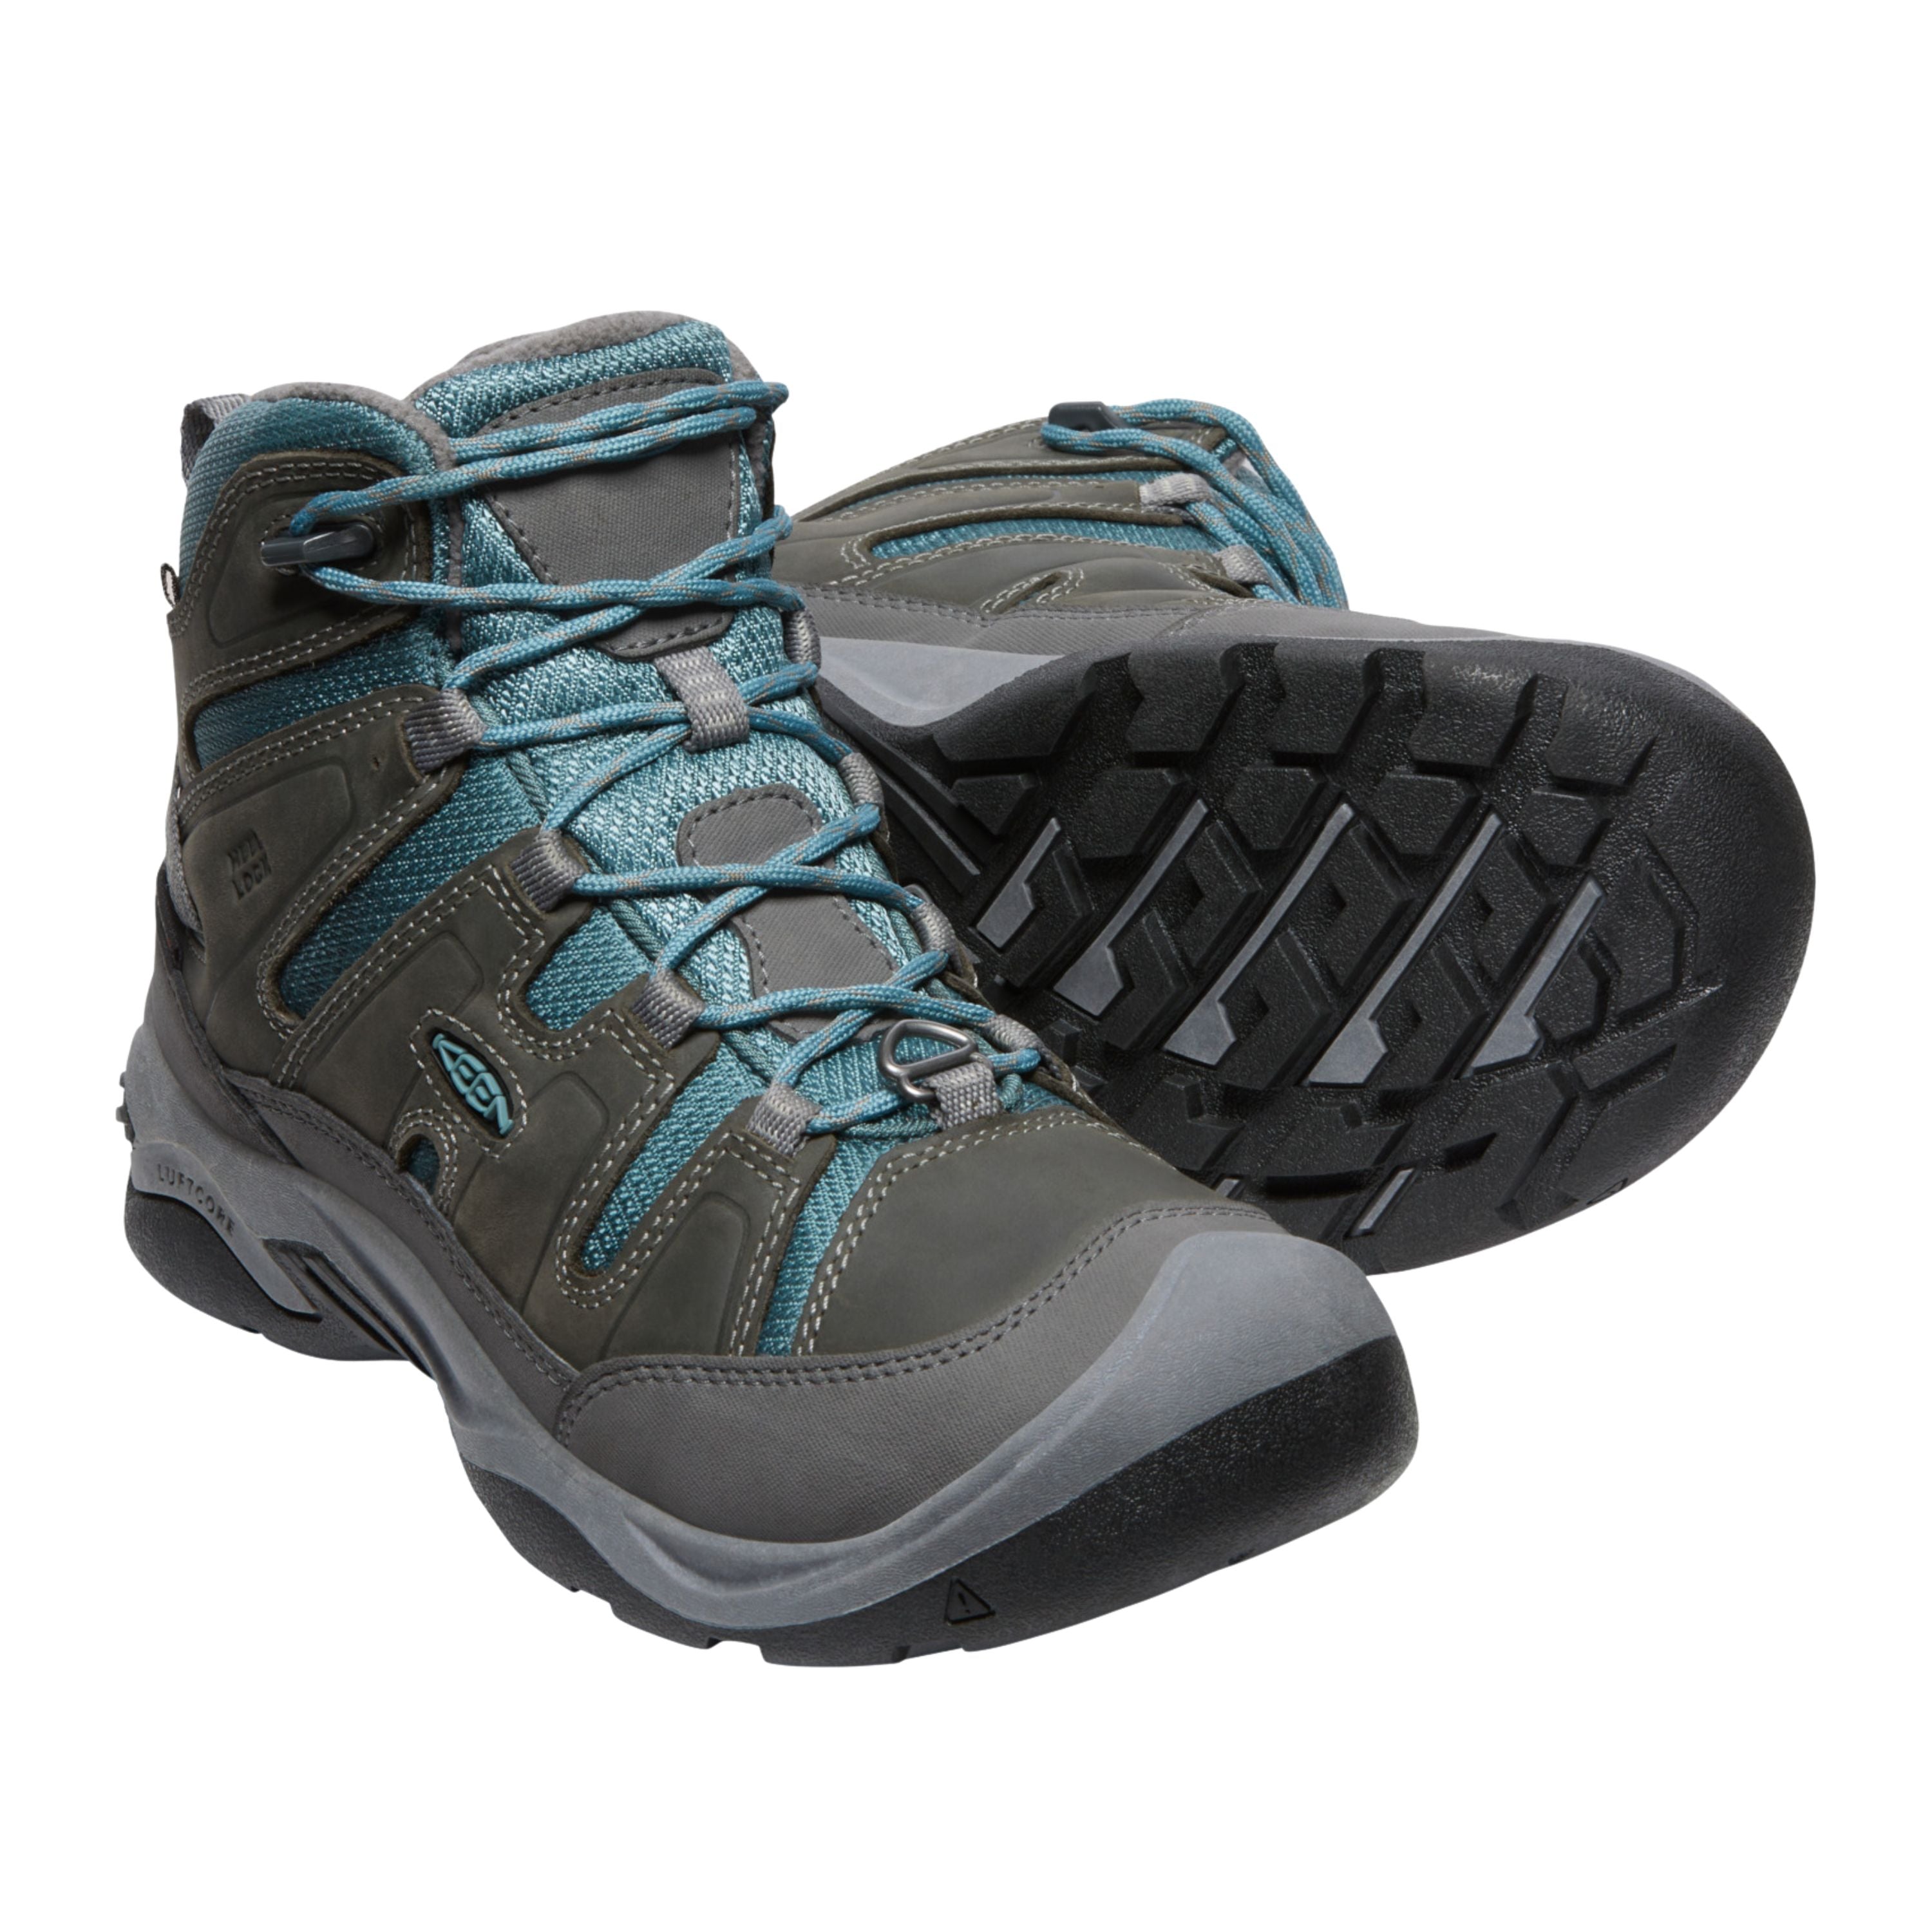 Bottes de randonnée isolées "Circadia MID Polar" - Femme||"Circadia MID Polar" Insulated hiking boots - Women's